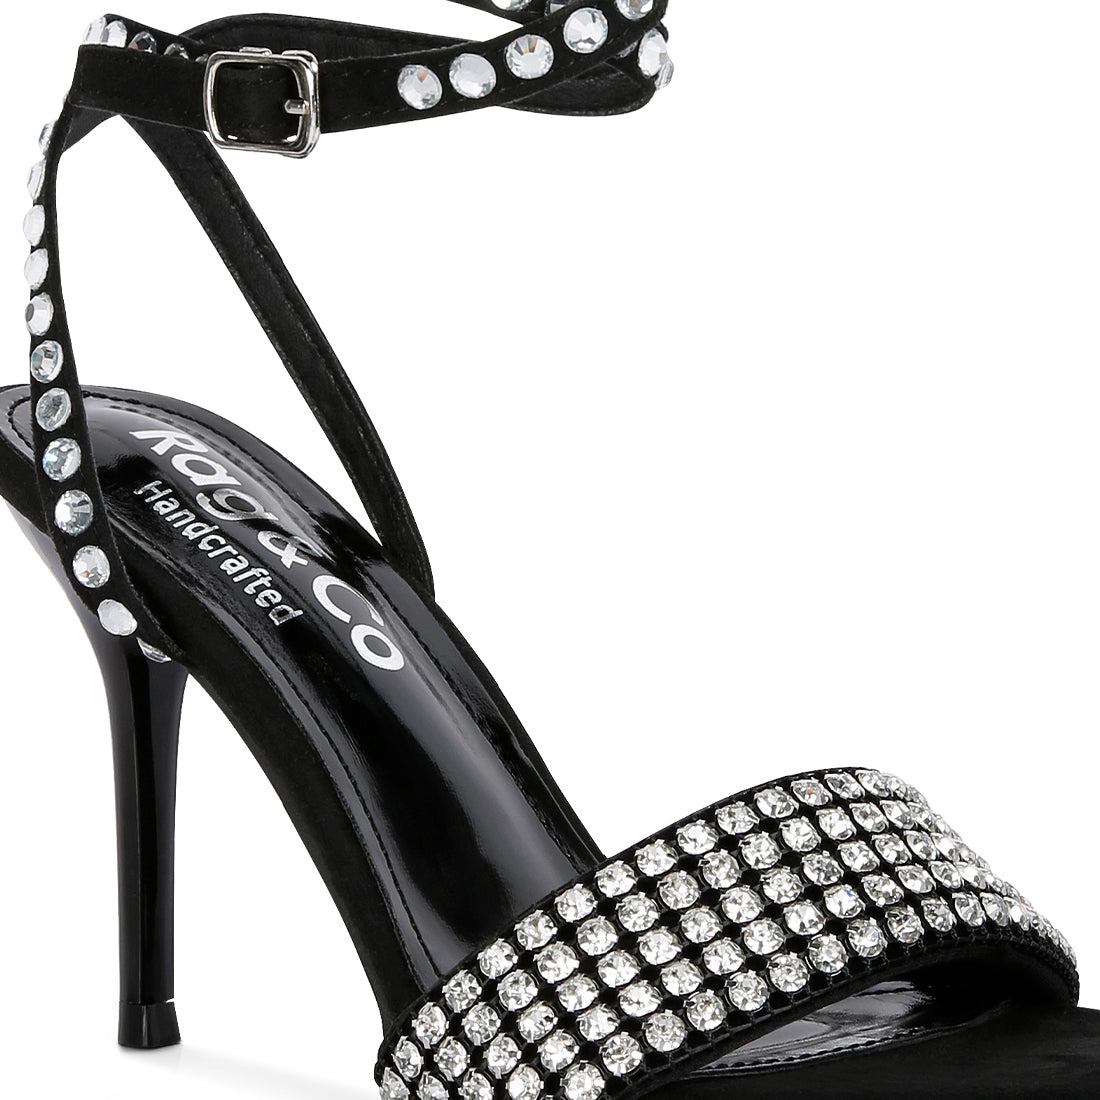 Black High Heeled Diamante Sandals